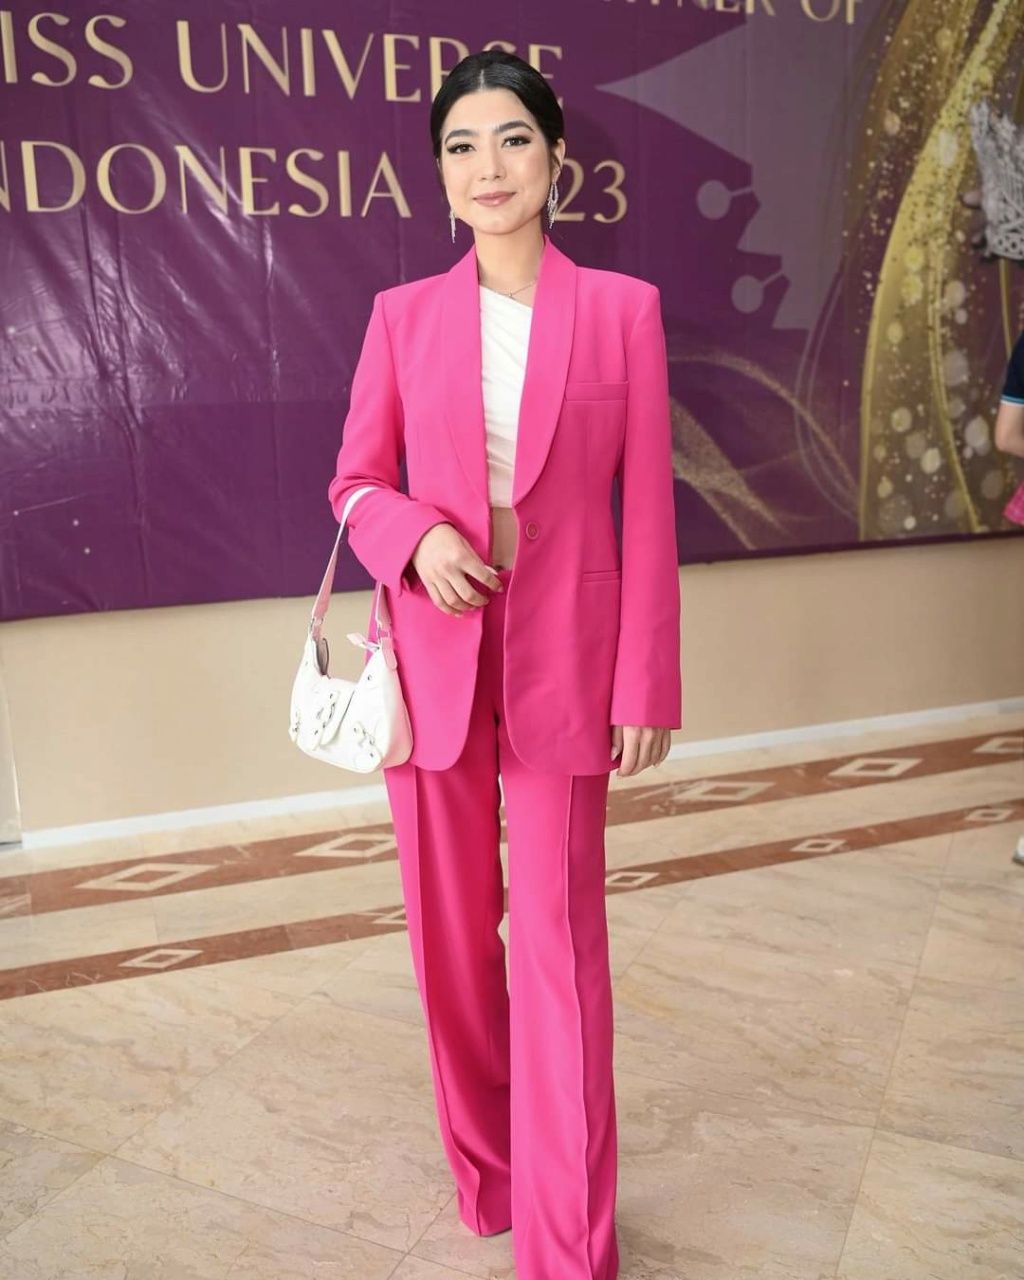 Miss Universe Indonesia 2023 Fb_i2163